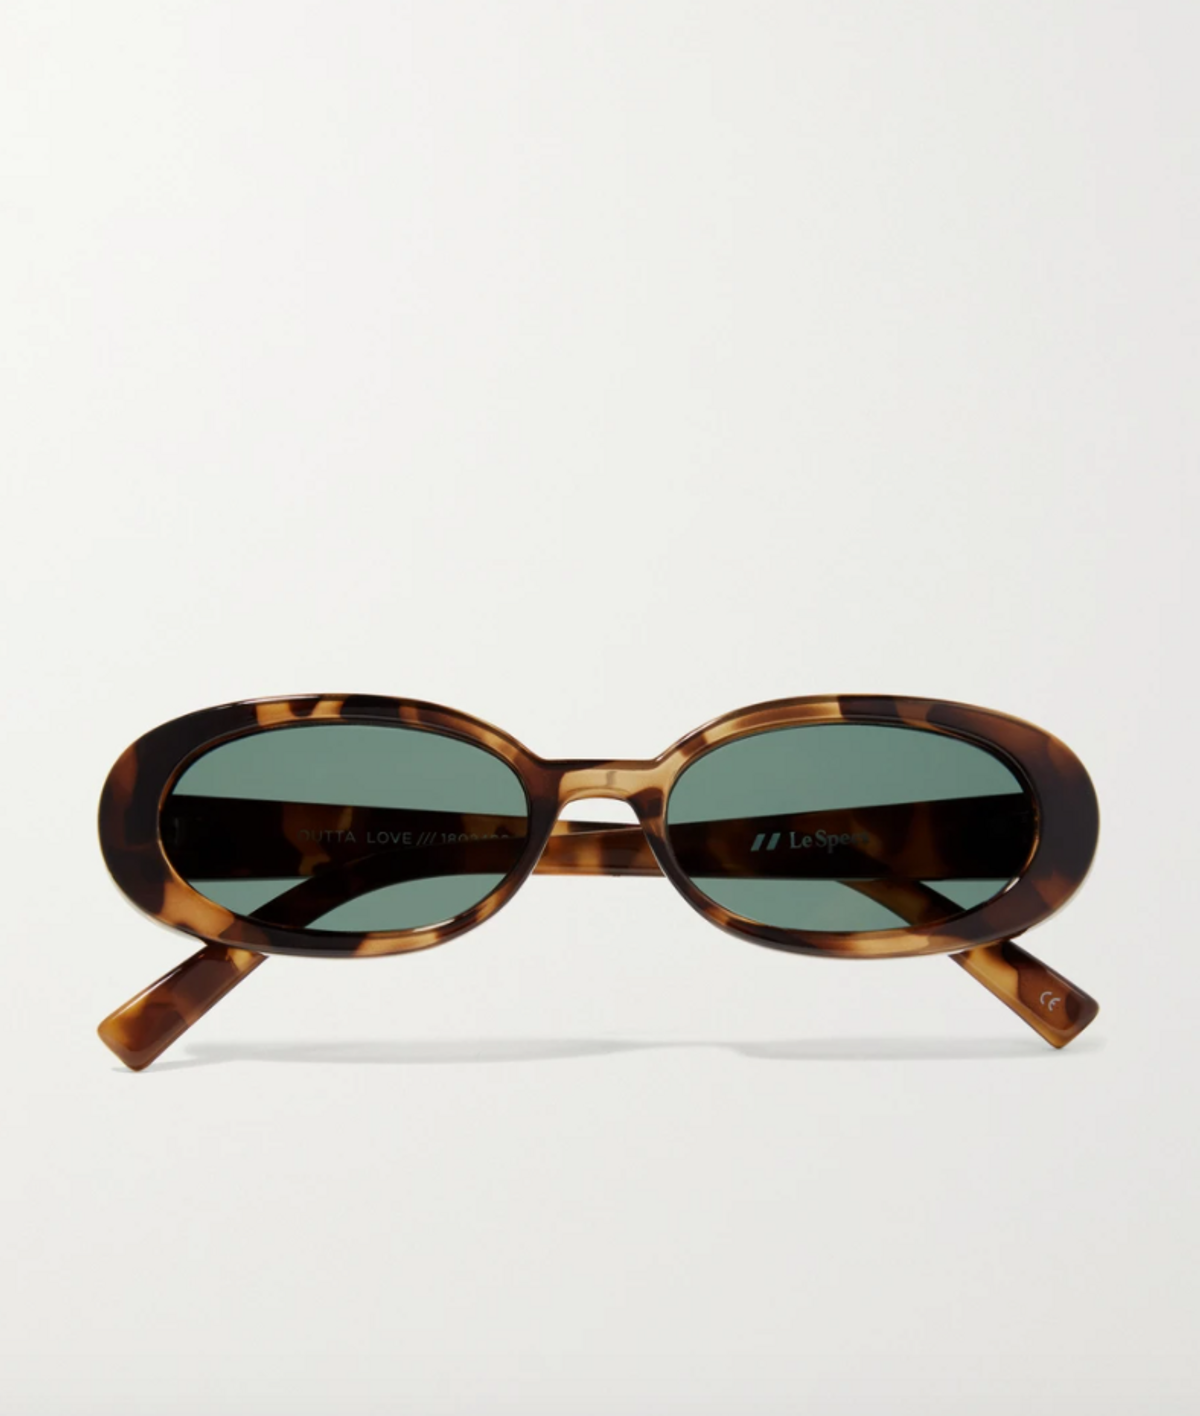 Outta Love Oval Frame Tortoiseshell Acetate Sunglasses